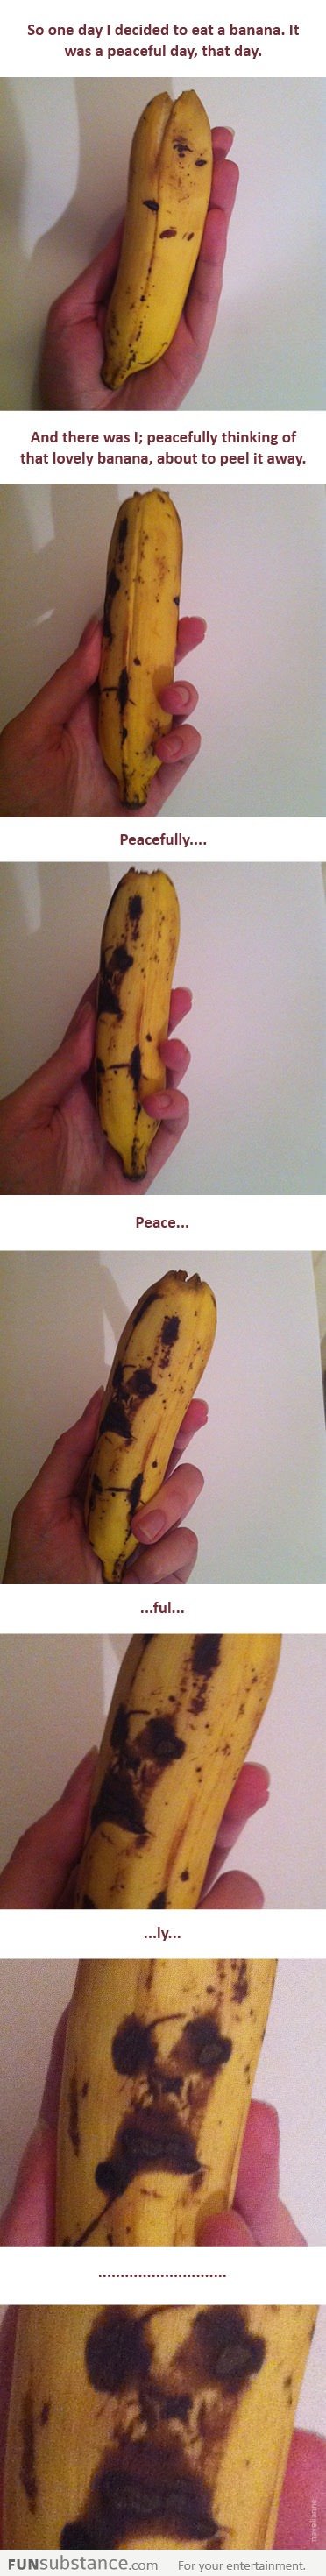 My peaceful banana